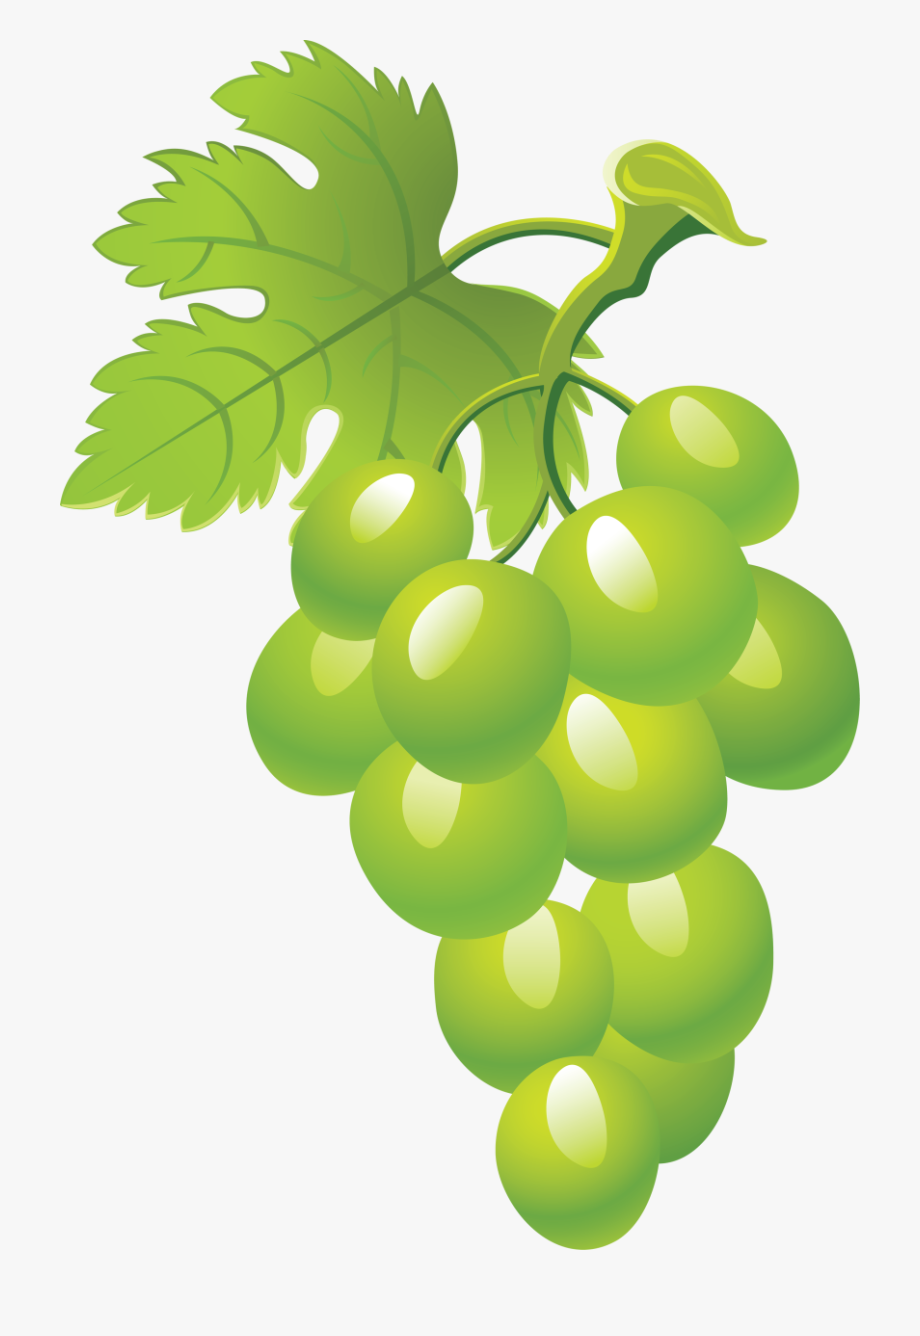 Grapes clipart green.